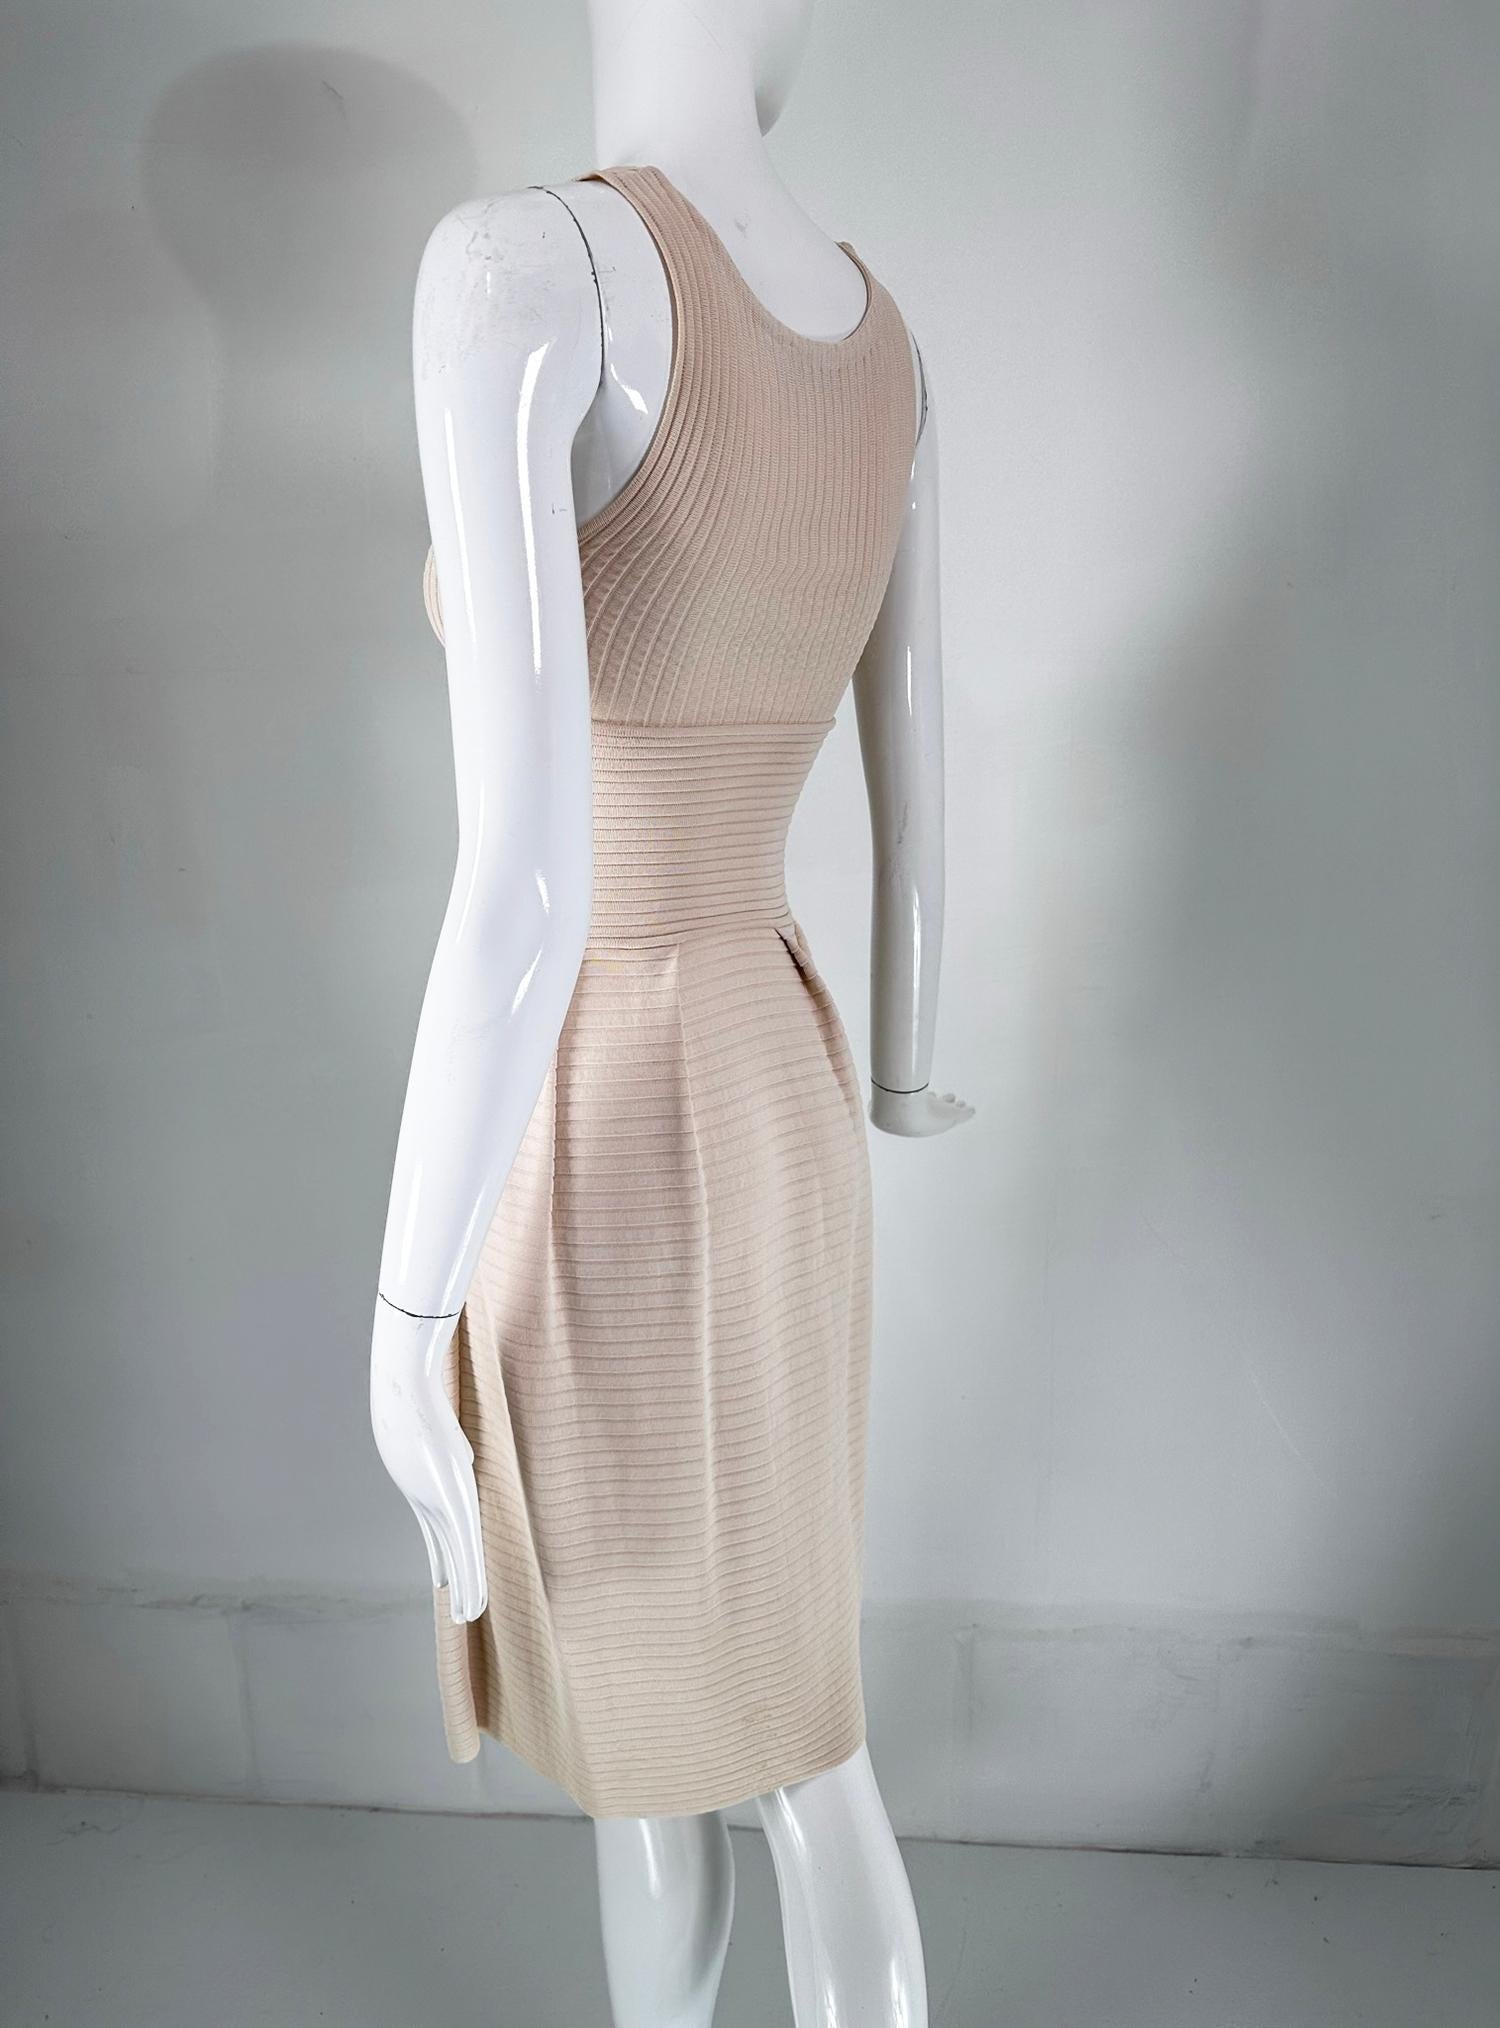 Christian Dior Paris Ribbed Knit Beige Tank Dress 2010 For Sale 6